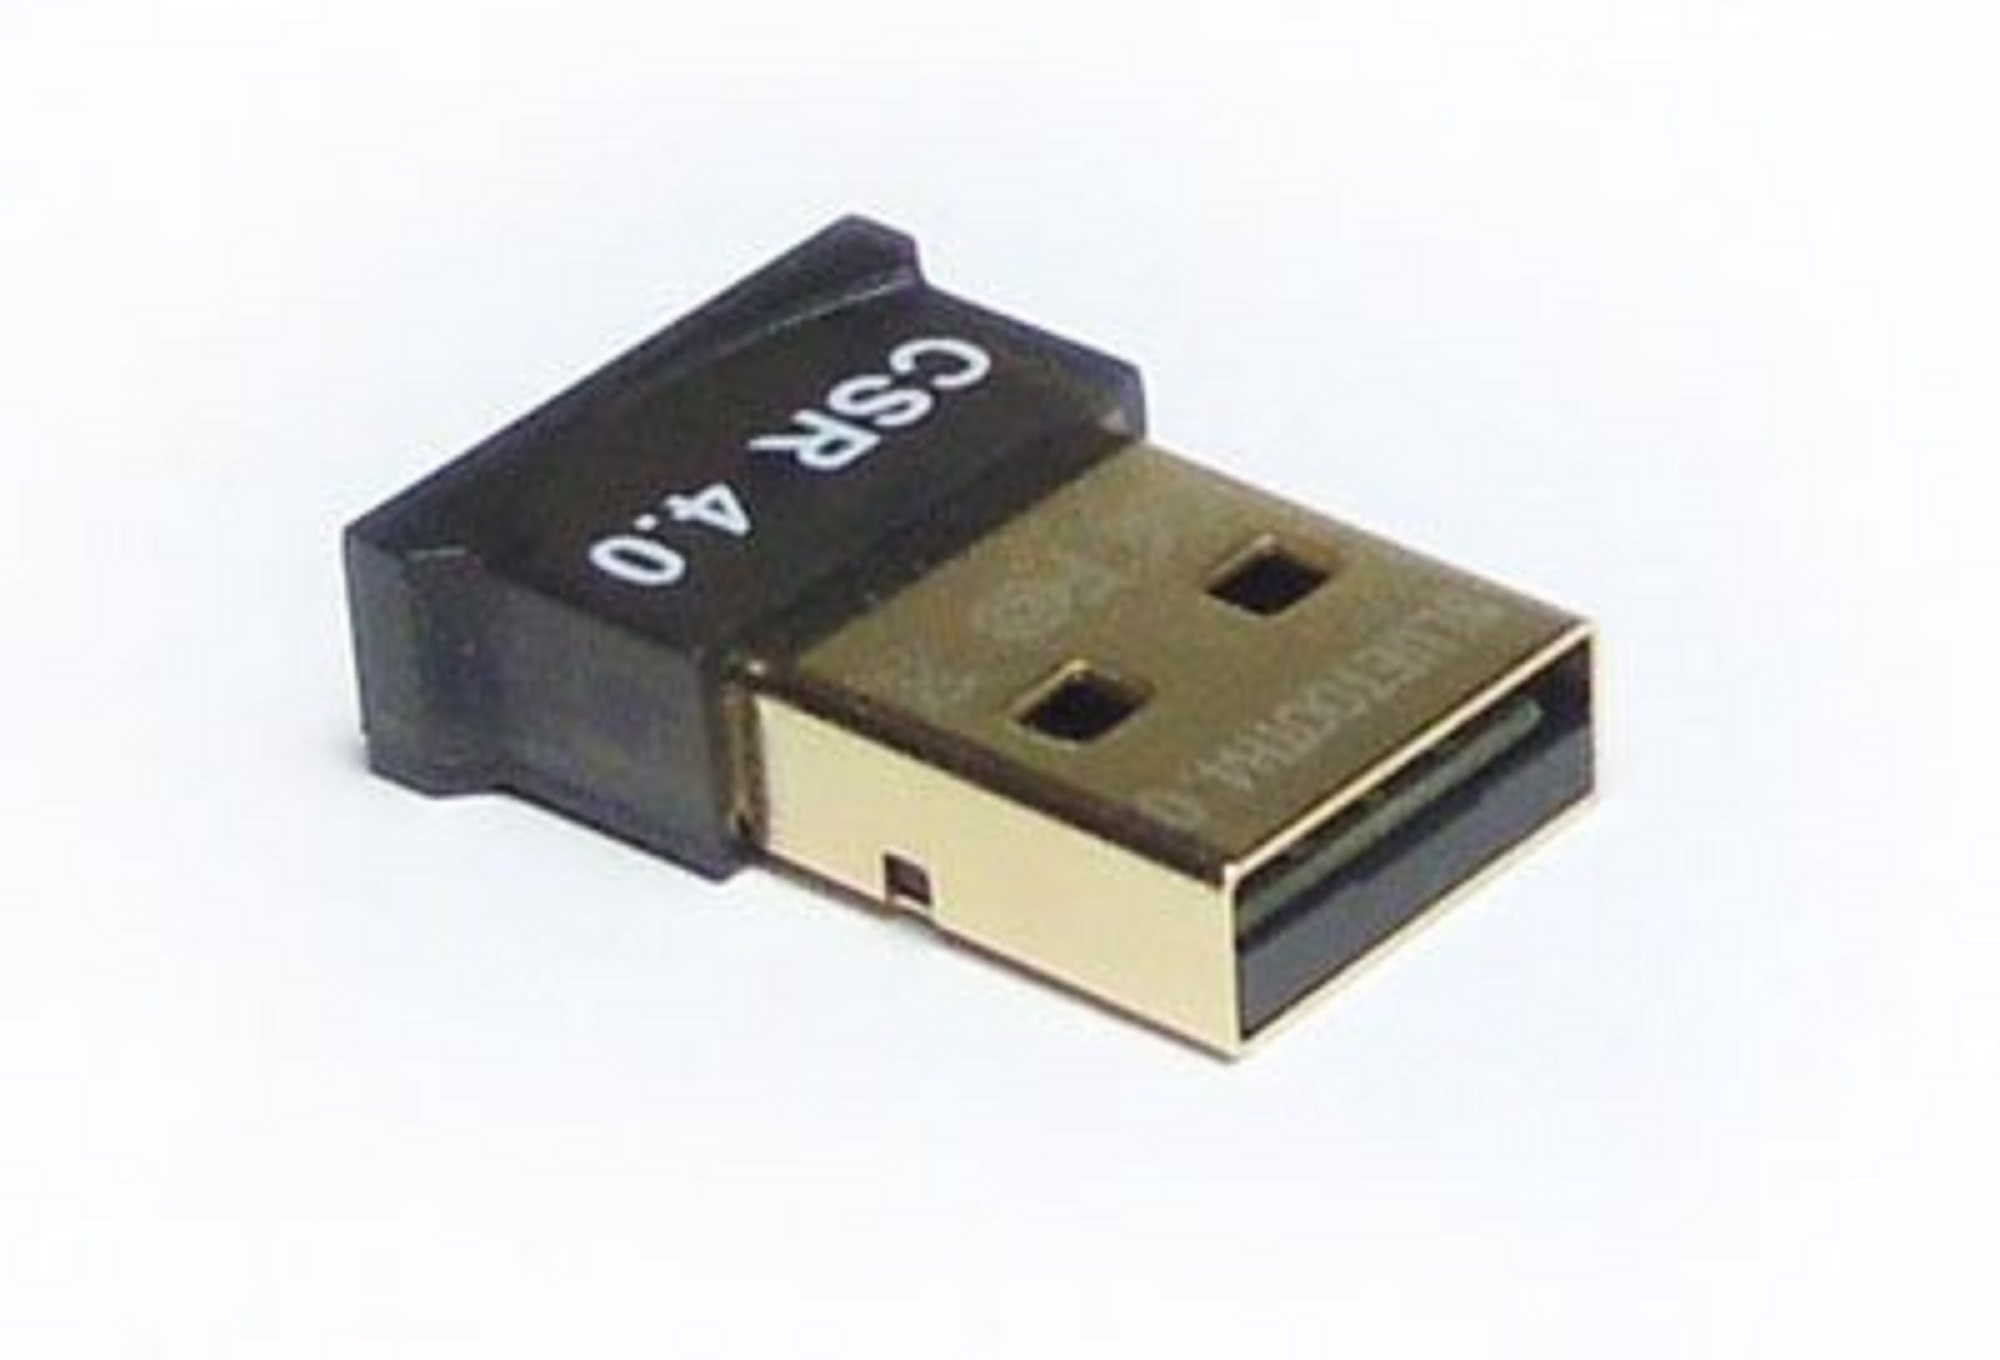 Tinkerbots USB Bluetooth Dongle